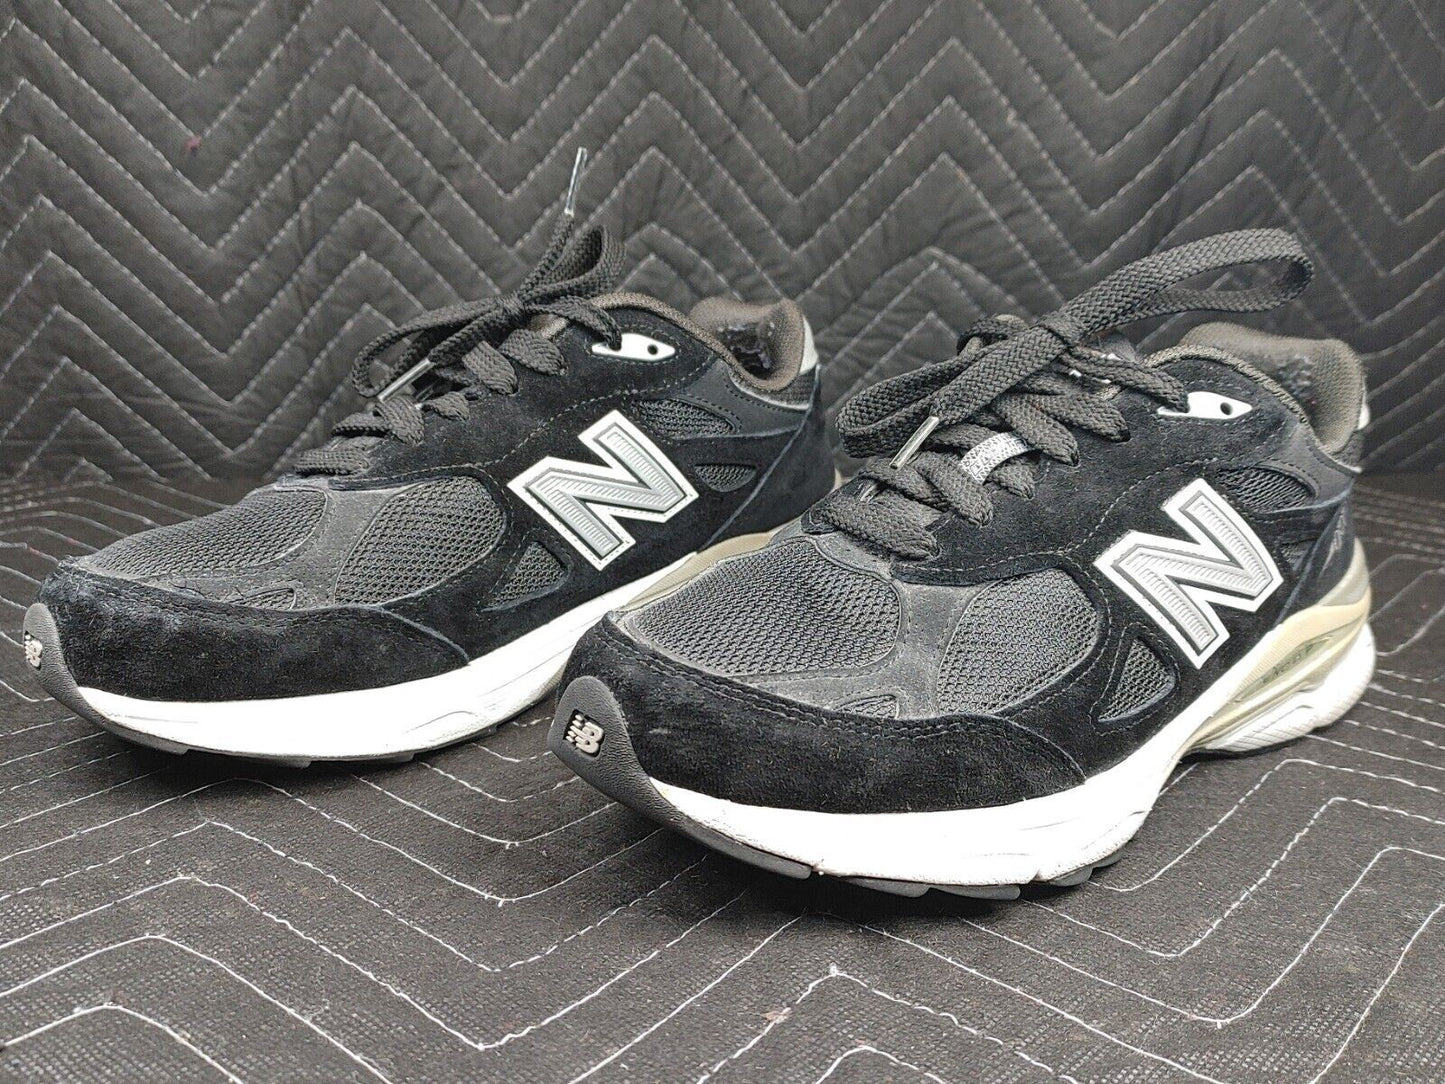 New Balance 990v3 W990BK3 Black Suede Running Shoes USA 990 v3 Women’s Size 9 D